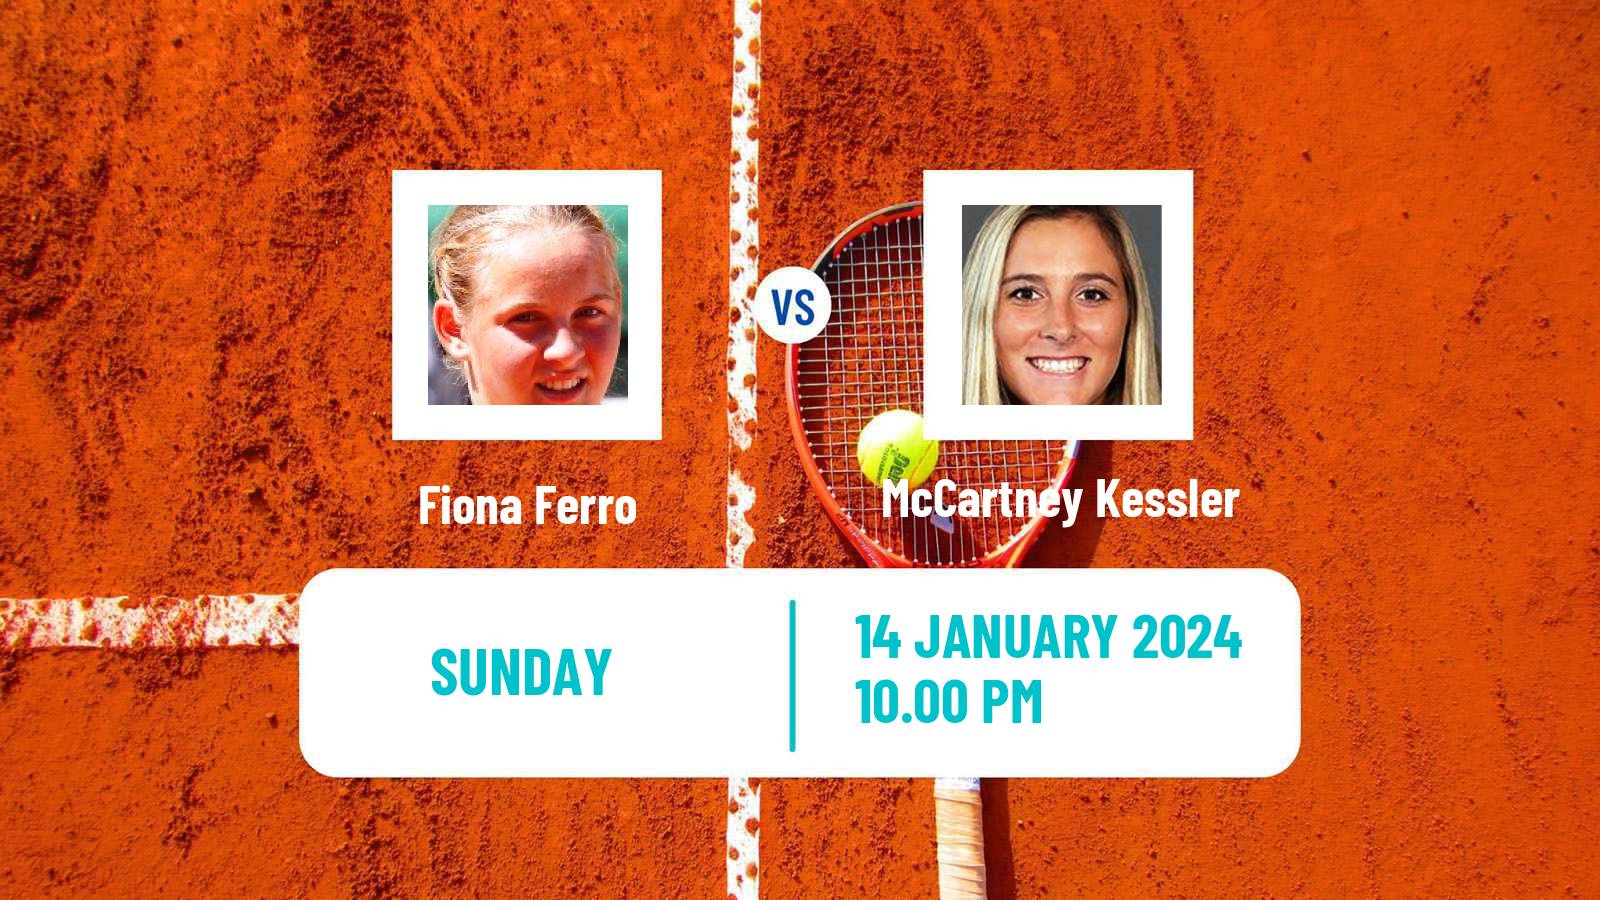 Tennis WTA Australian Open Fiona Ferro - McCartney Kessler